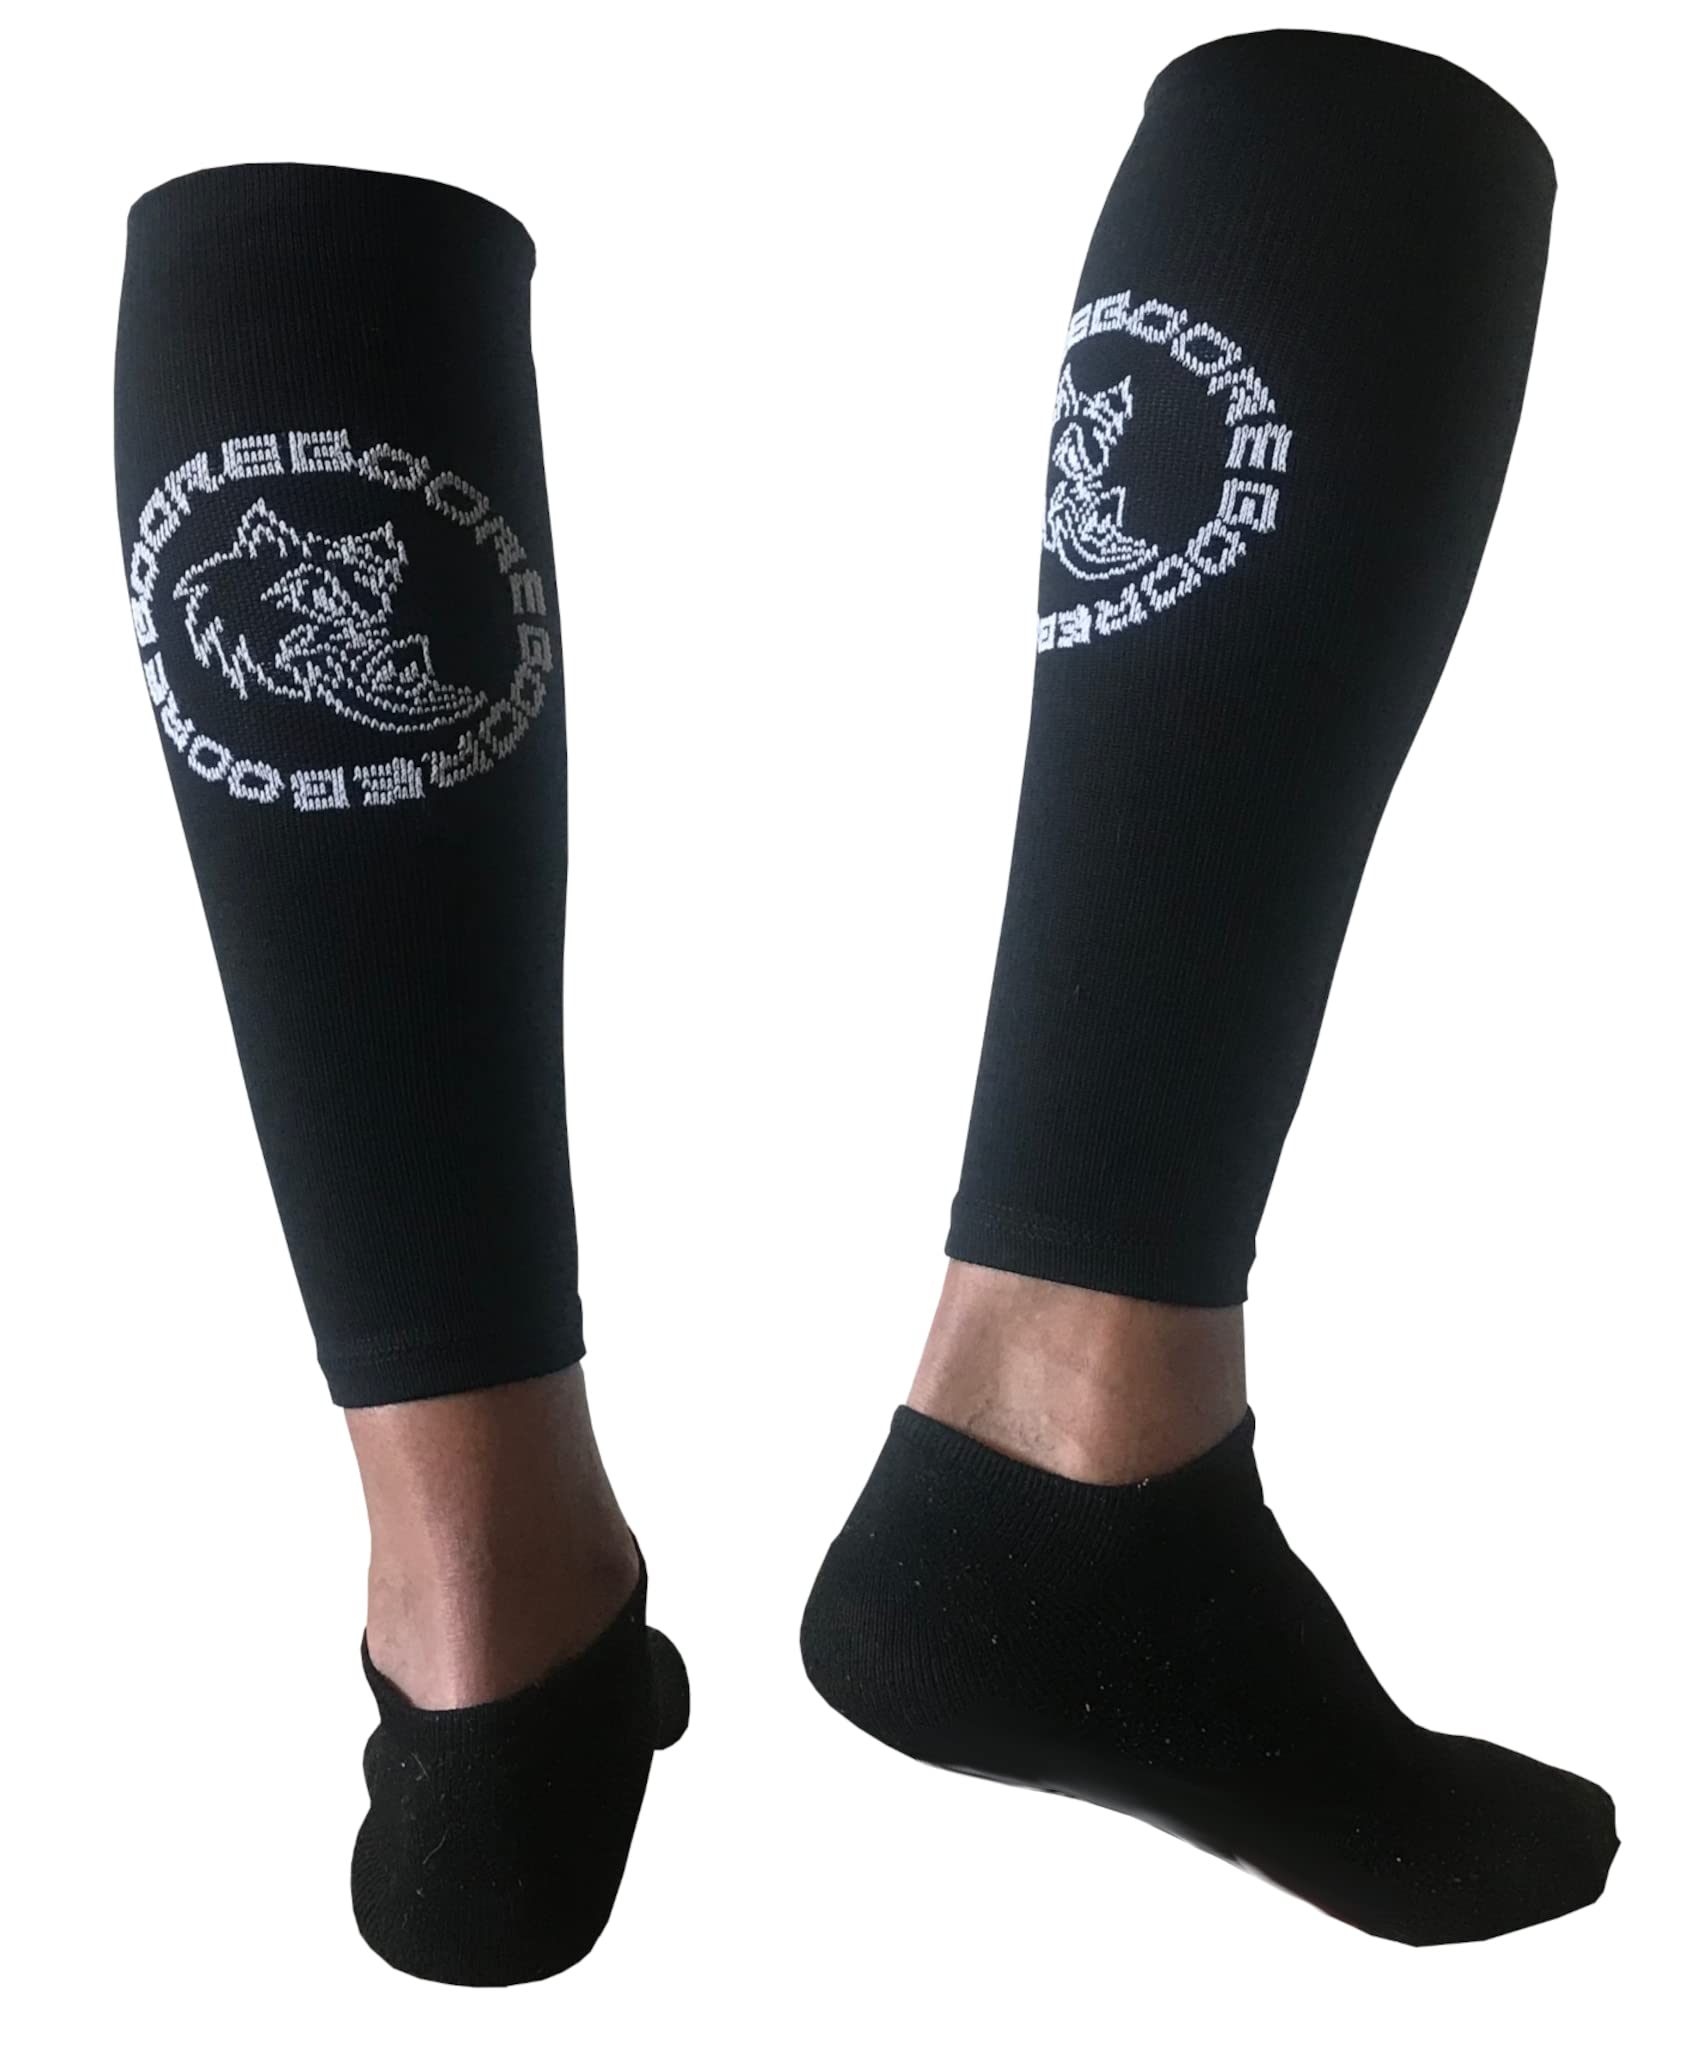 Leg Guard Compression Calf Sleeve Women Men Shin Guards Football